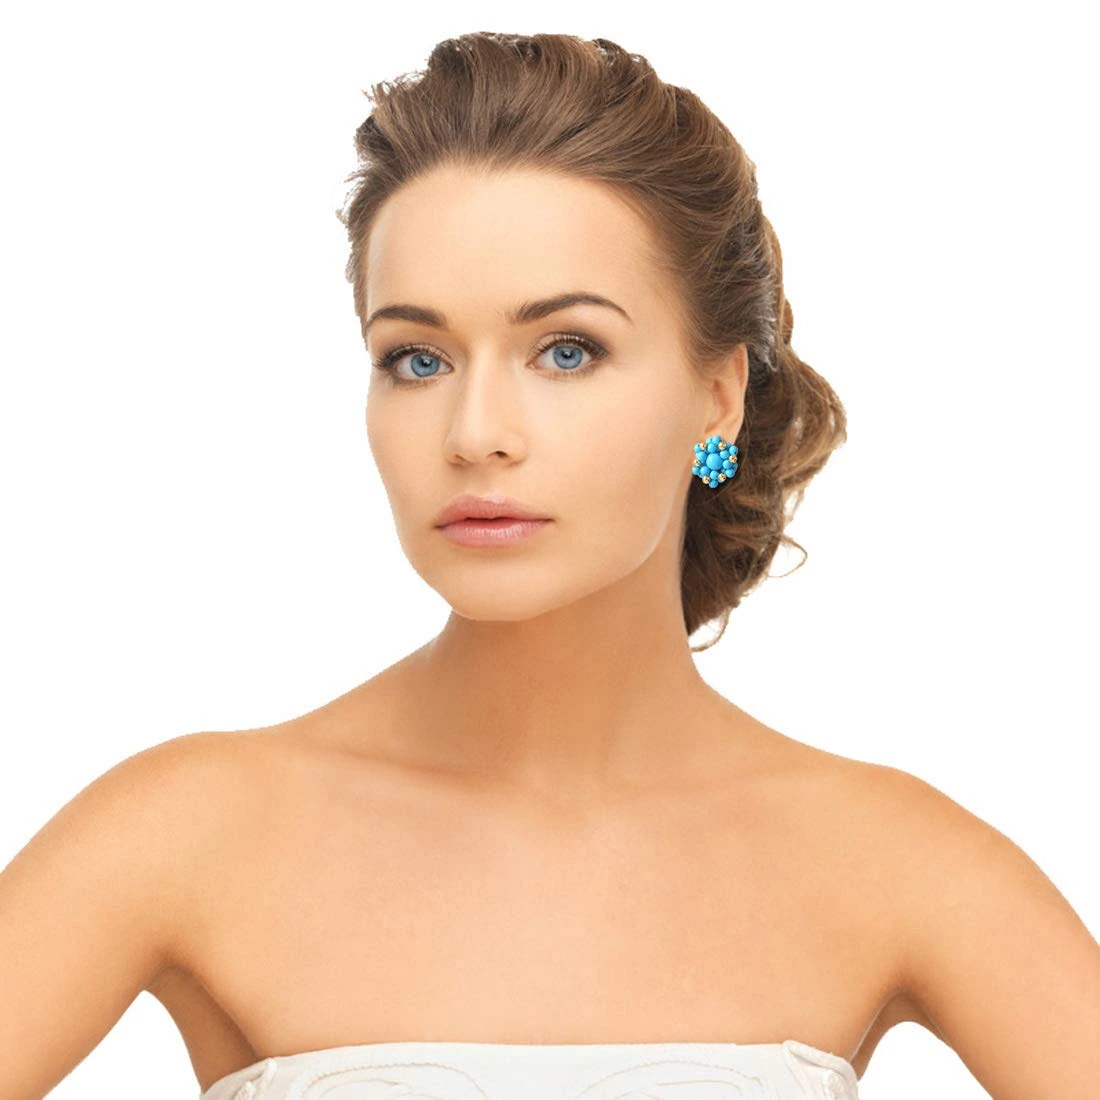 Love Blue Beads - Real Turquoise Beads Kuda Jodi Earrings for Women (SE20)